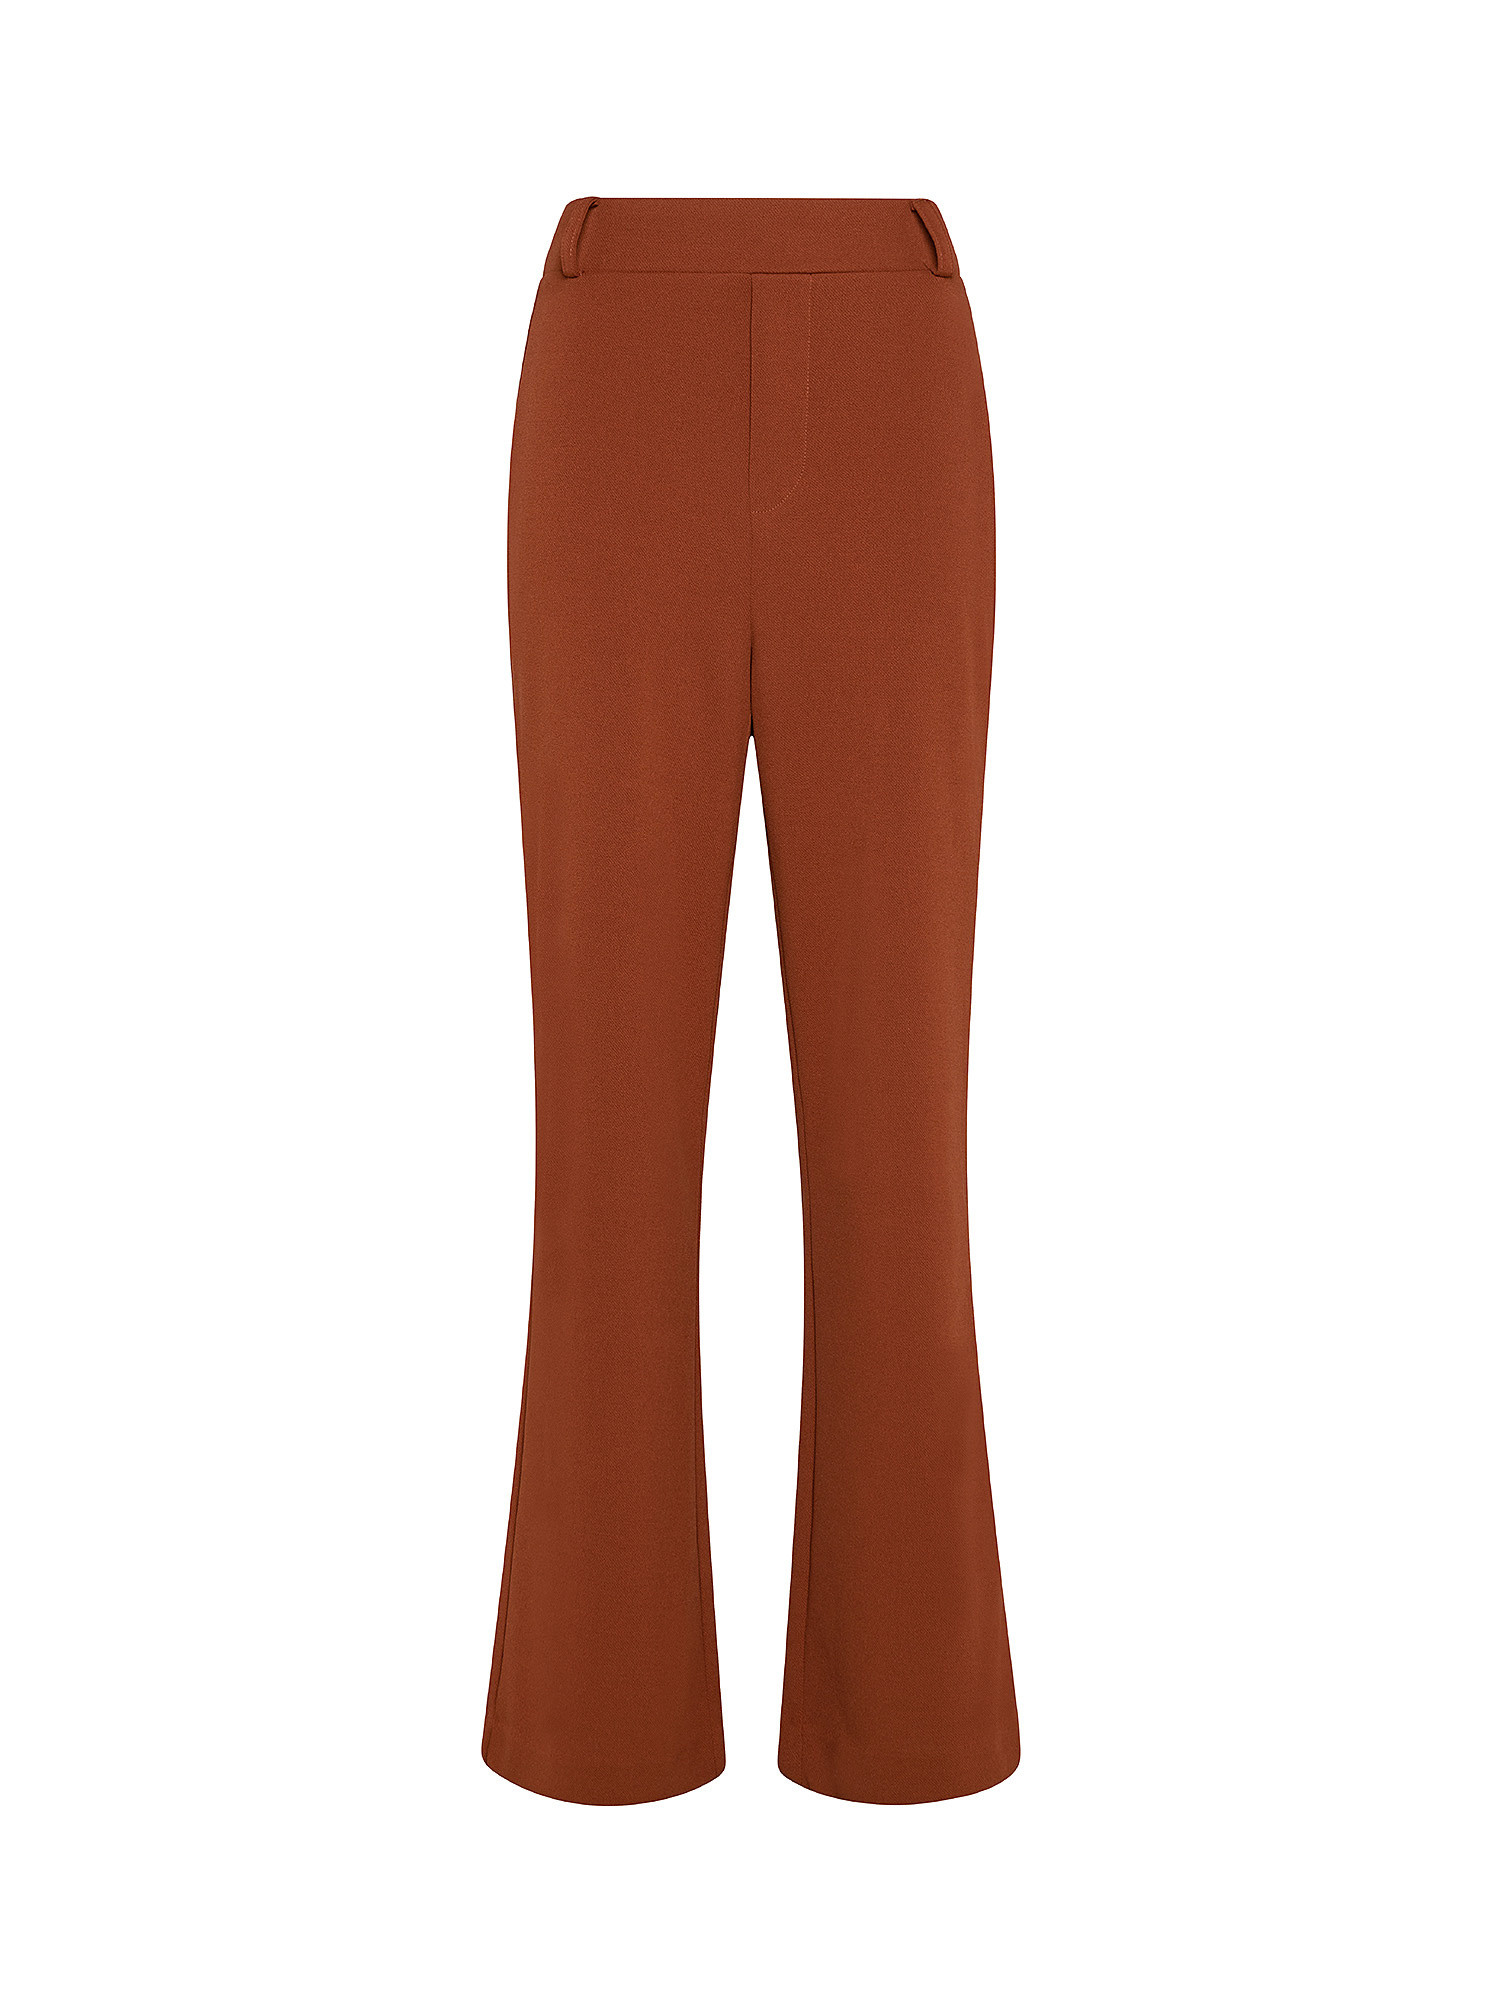 Pantalone con elastico, Marrone chiaro, large image number 0